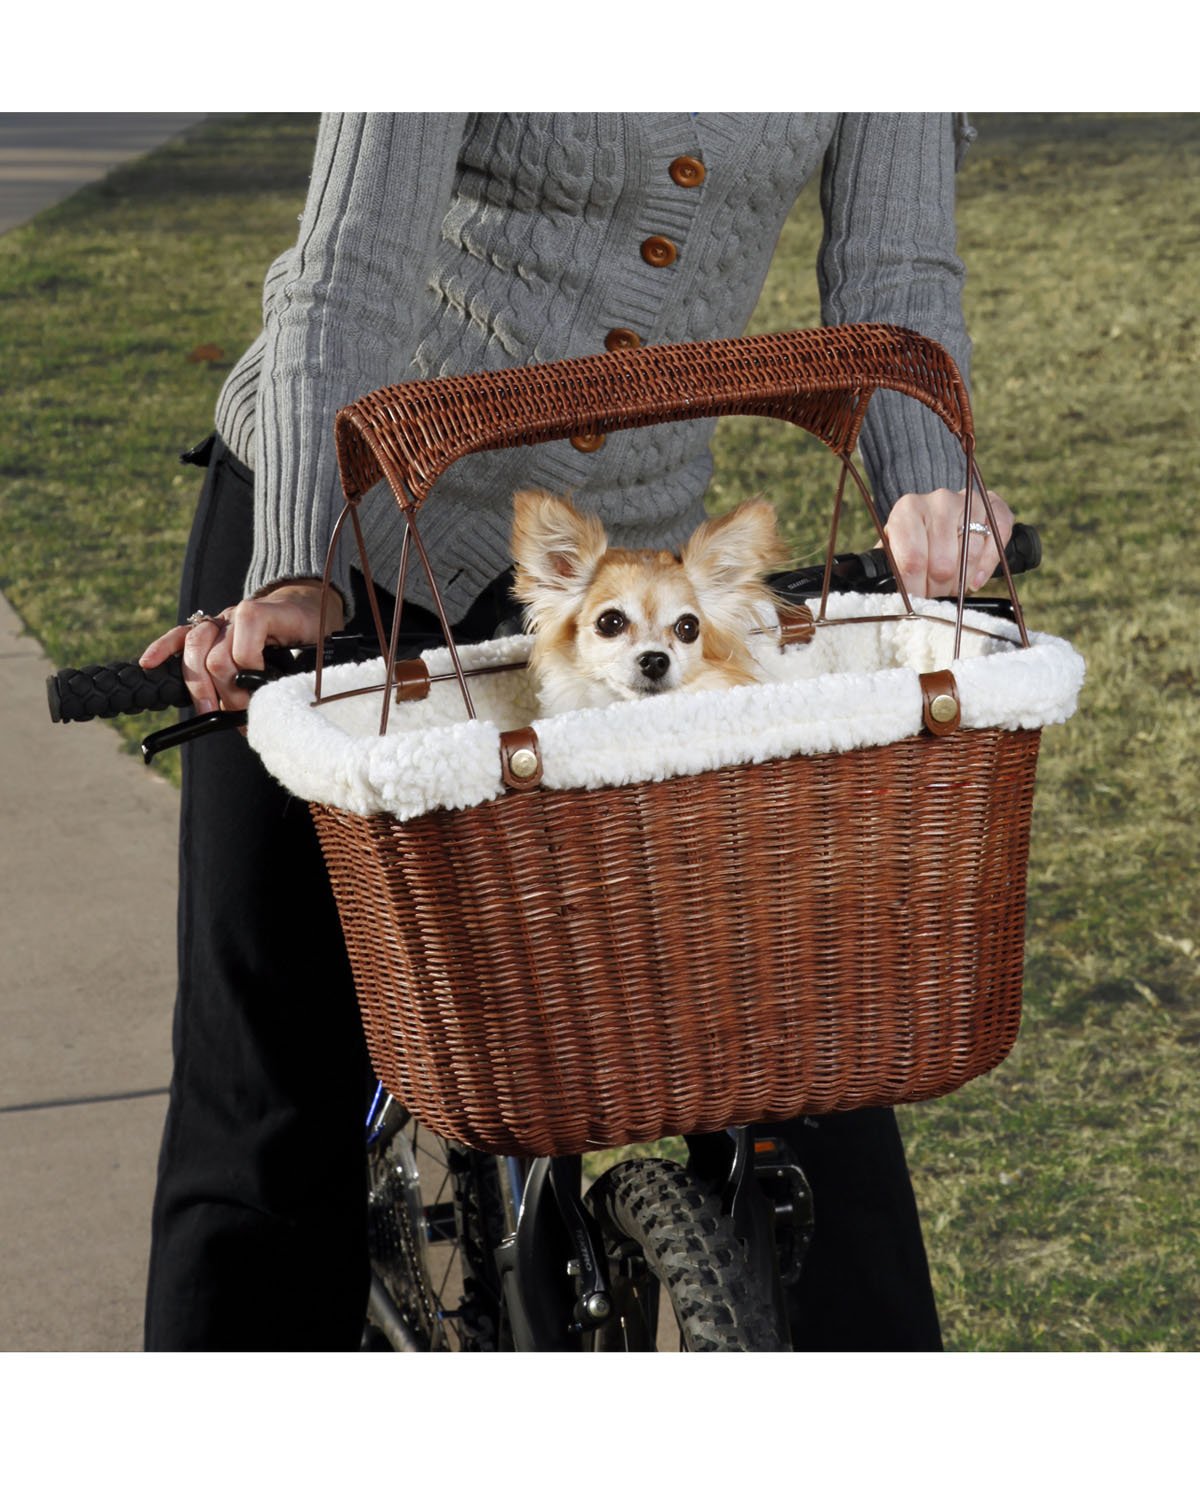 PetSafe Solvit Tagalong Wicker Bicycle Basket